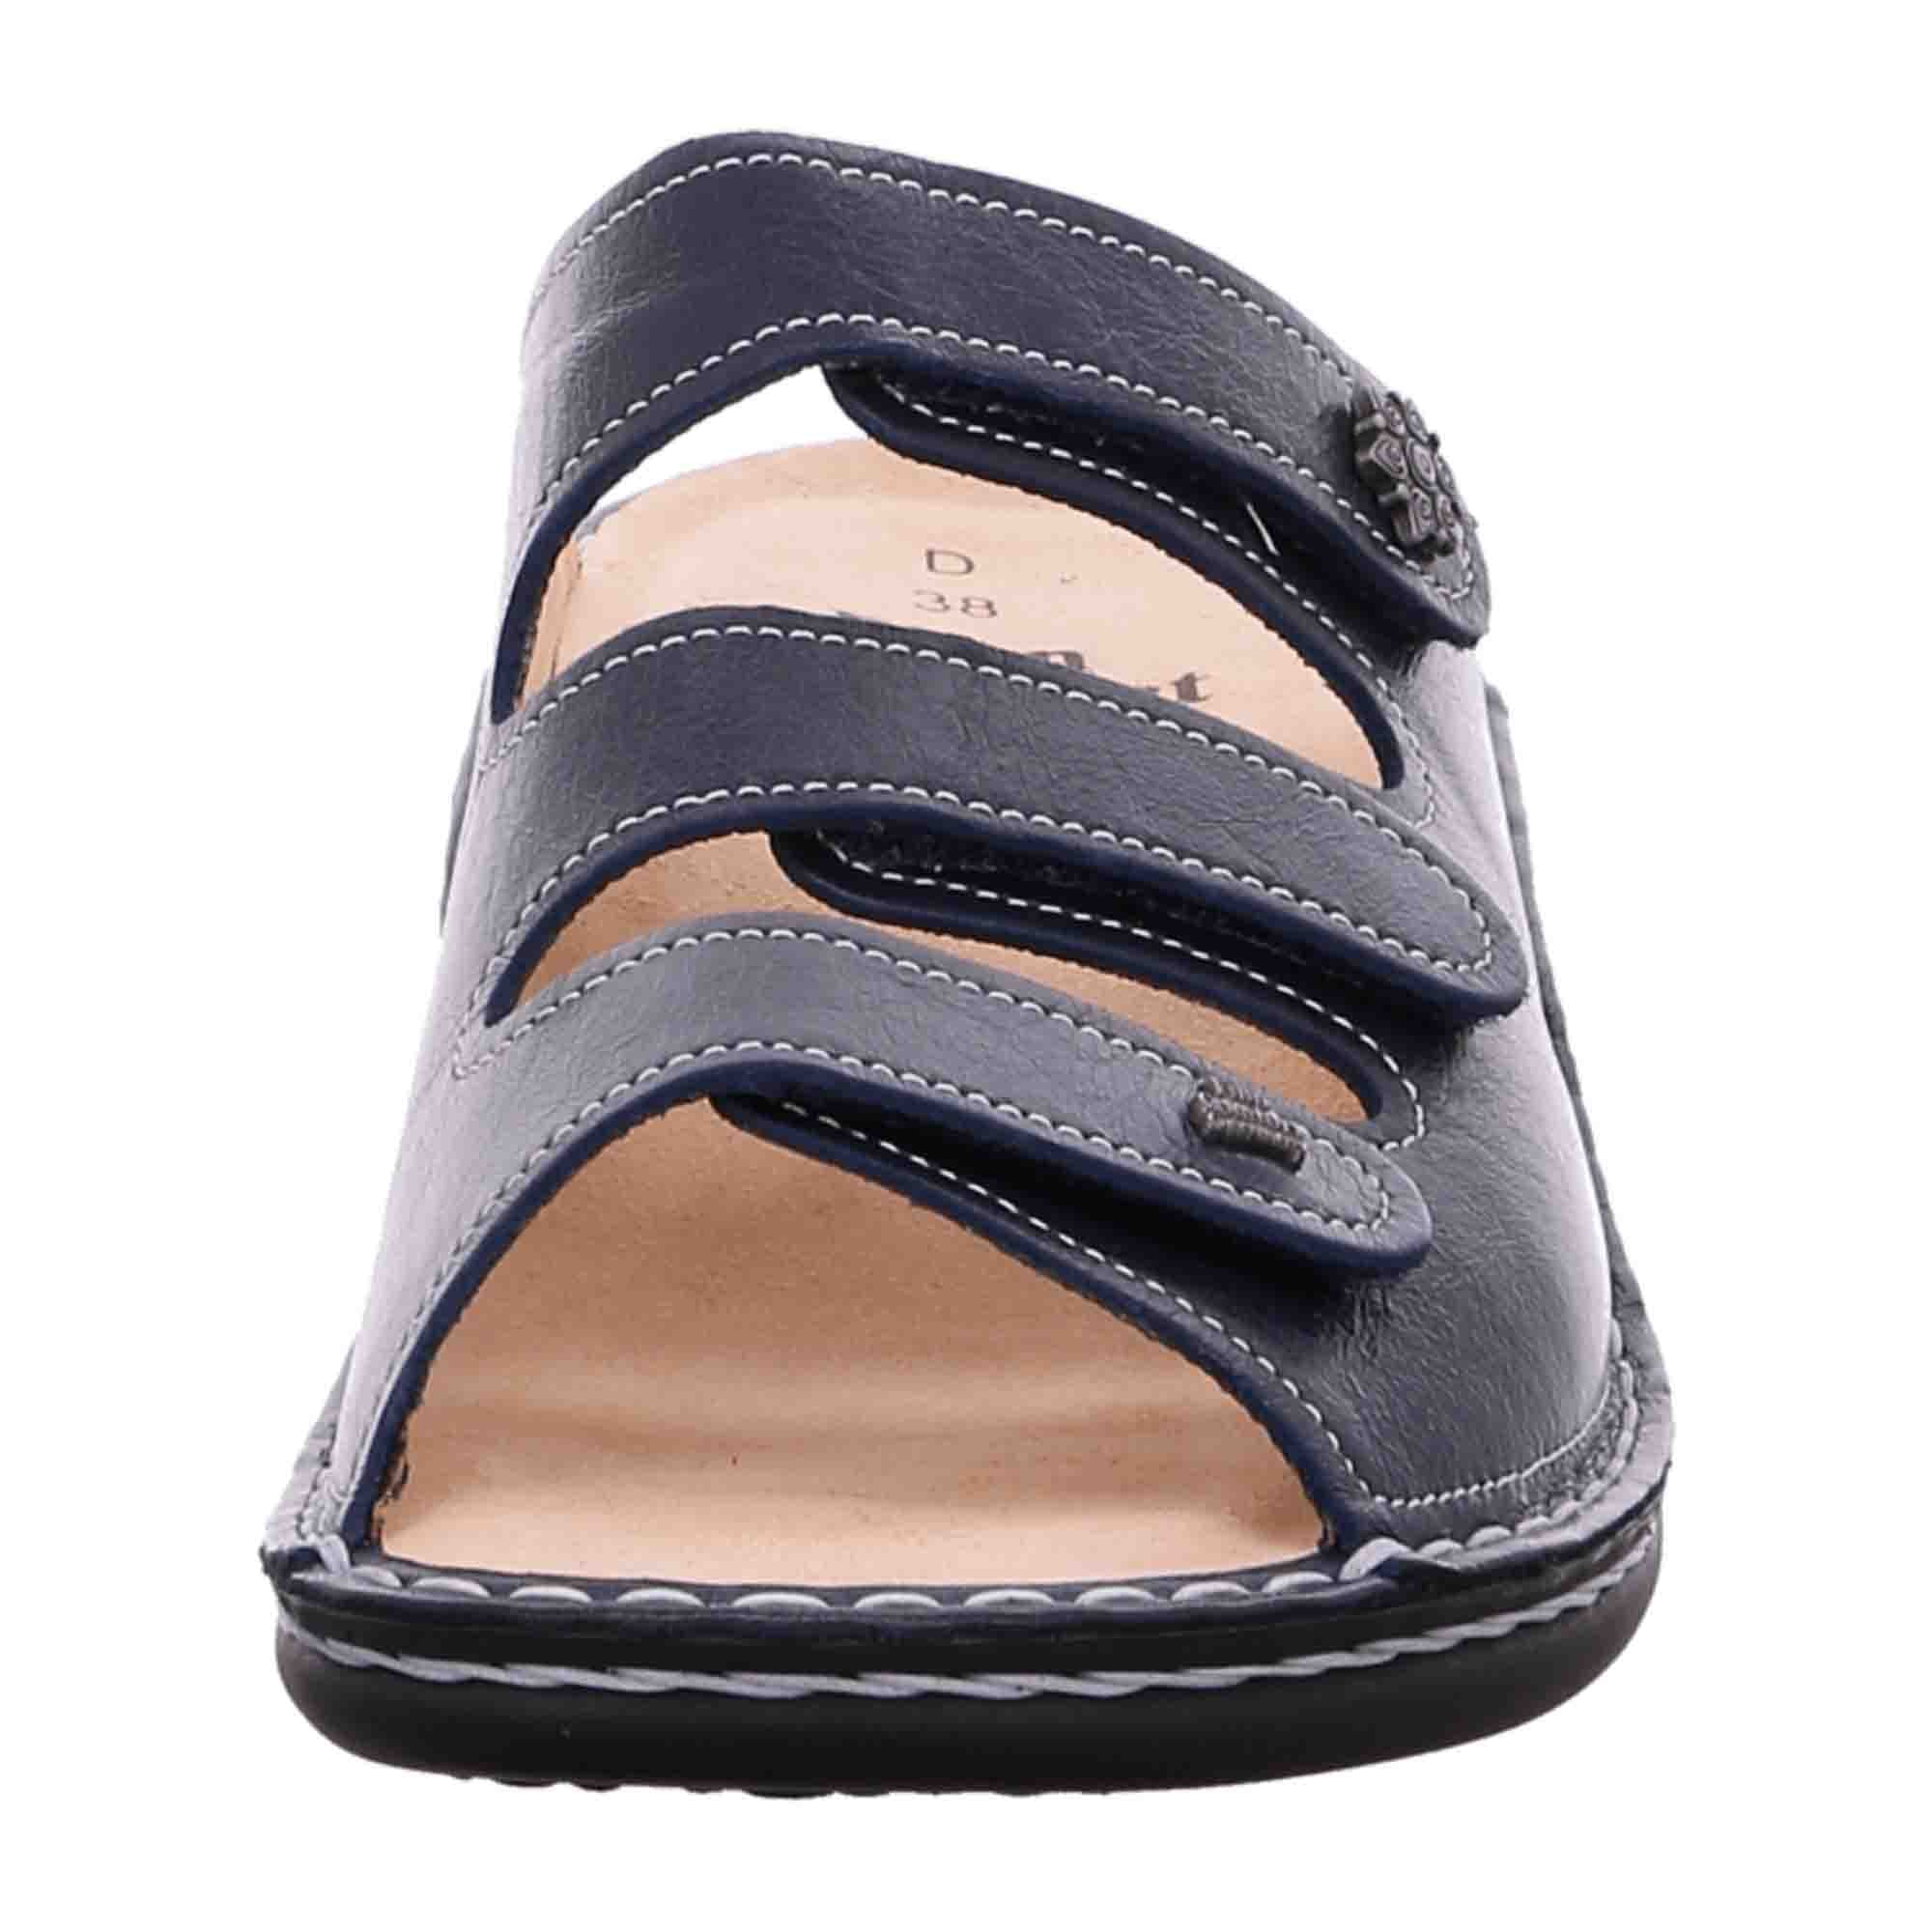 Finn Comfort Menorca-S Women's Sandals, Stylish & Comfortable, Blue